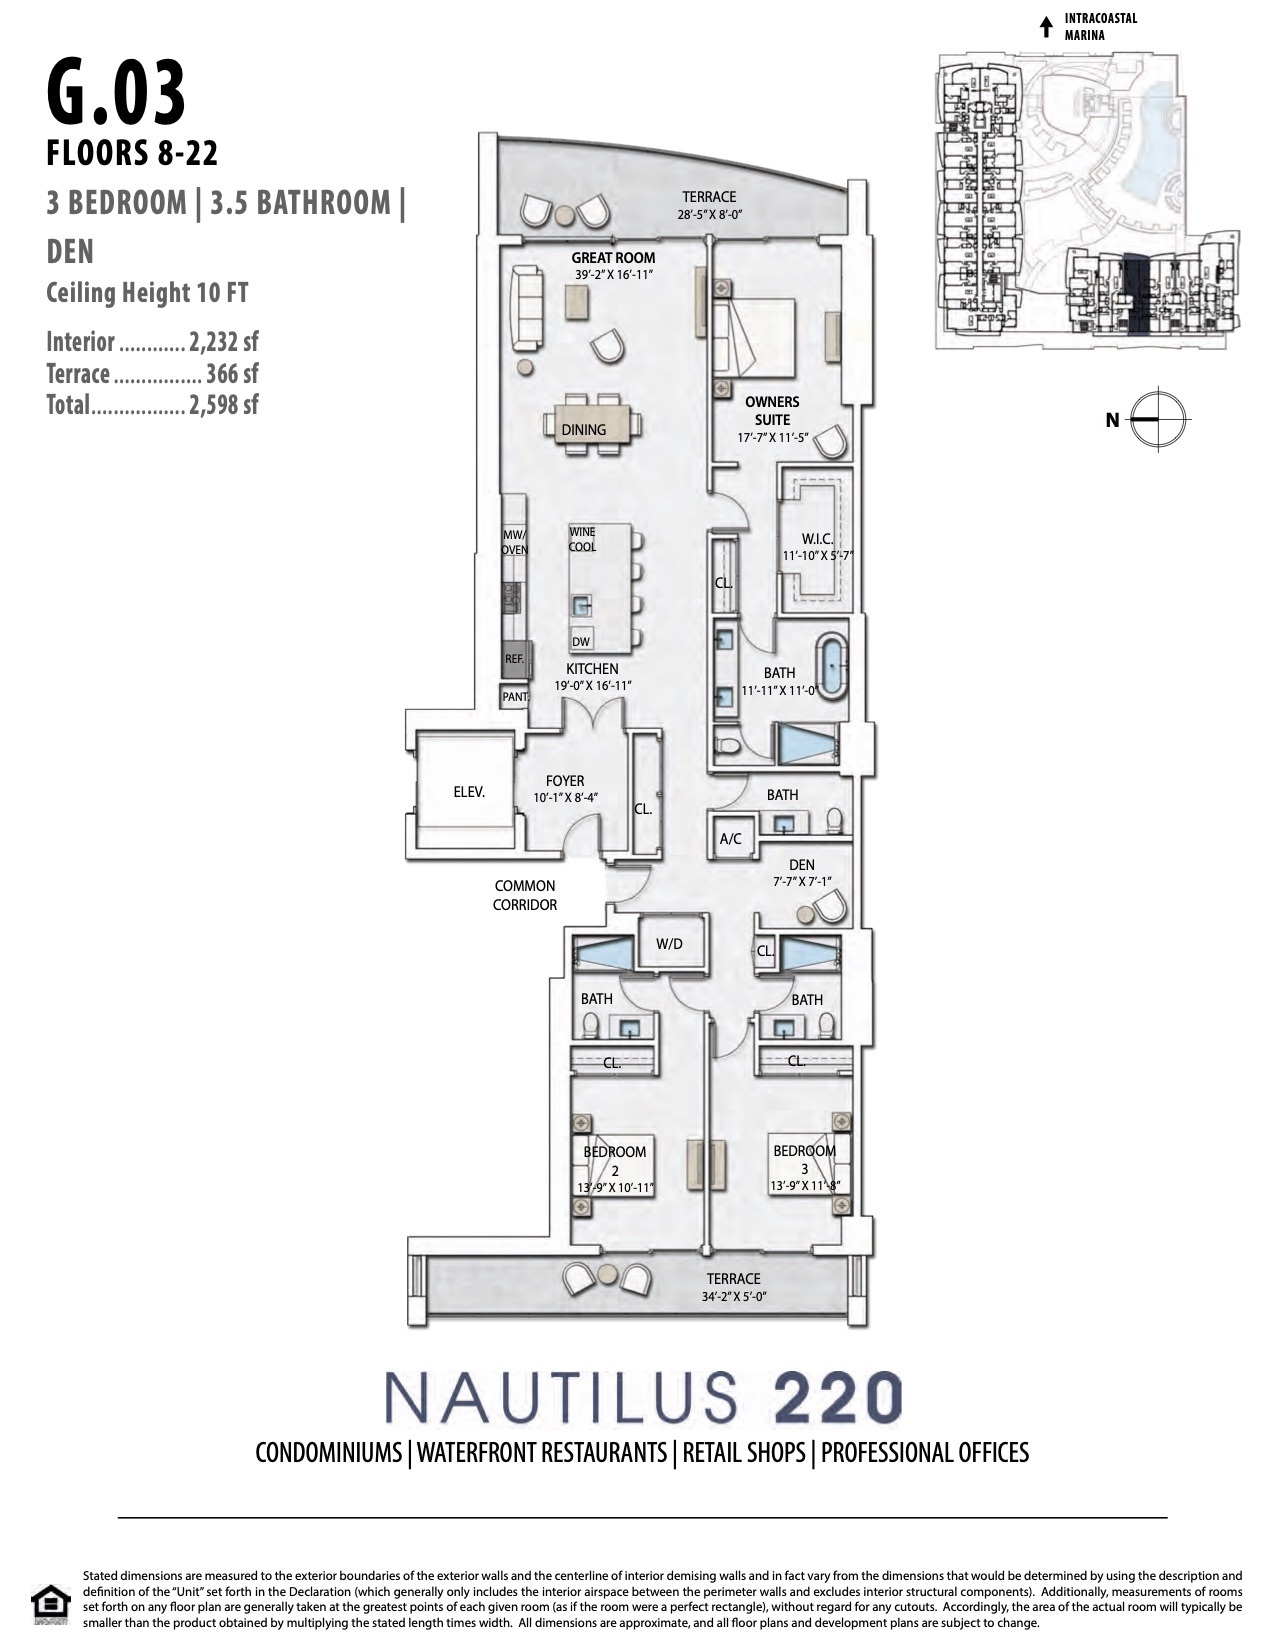 Floor Plan for Nautilus 220 Floorplans, G.03